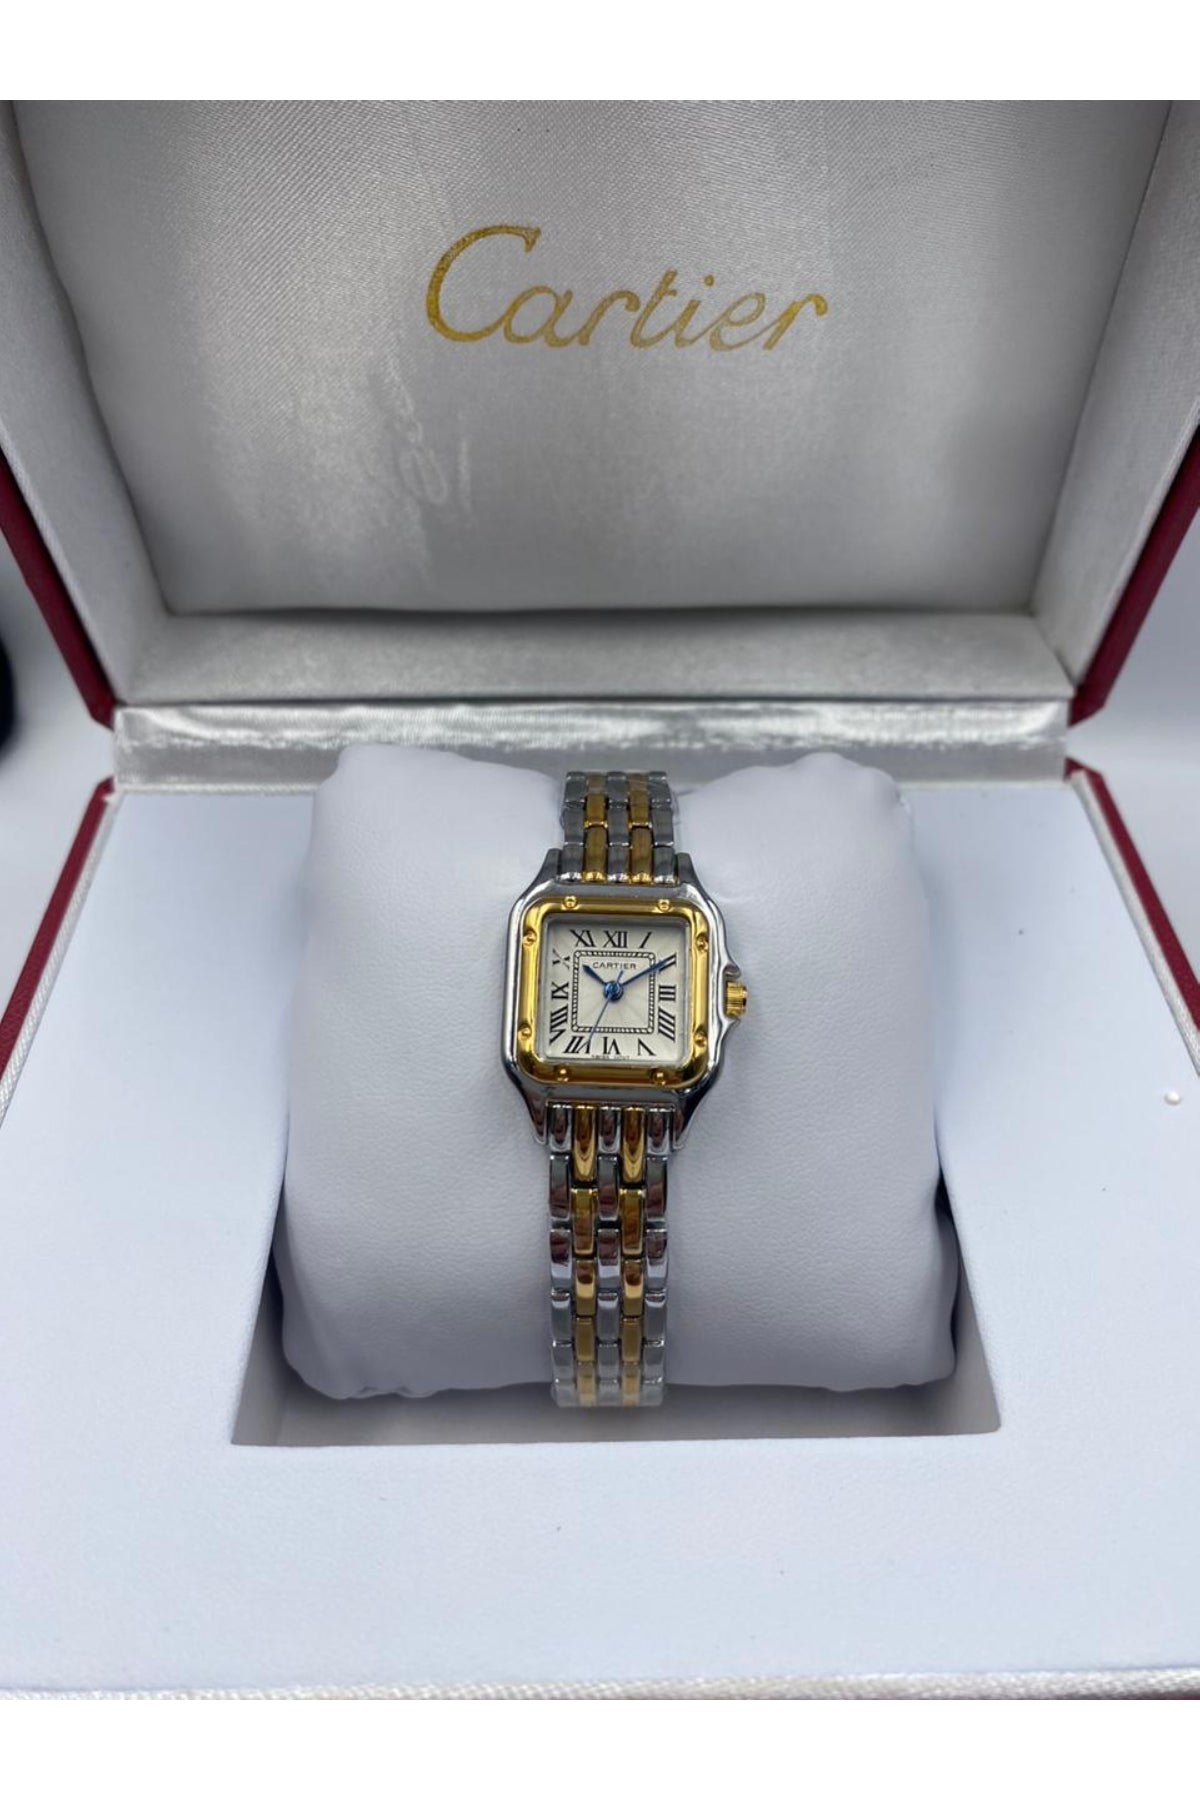 CARTIER - Luxury Square Watch - UAE